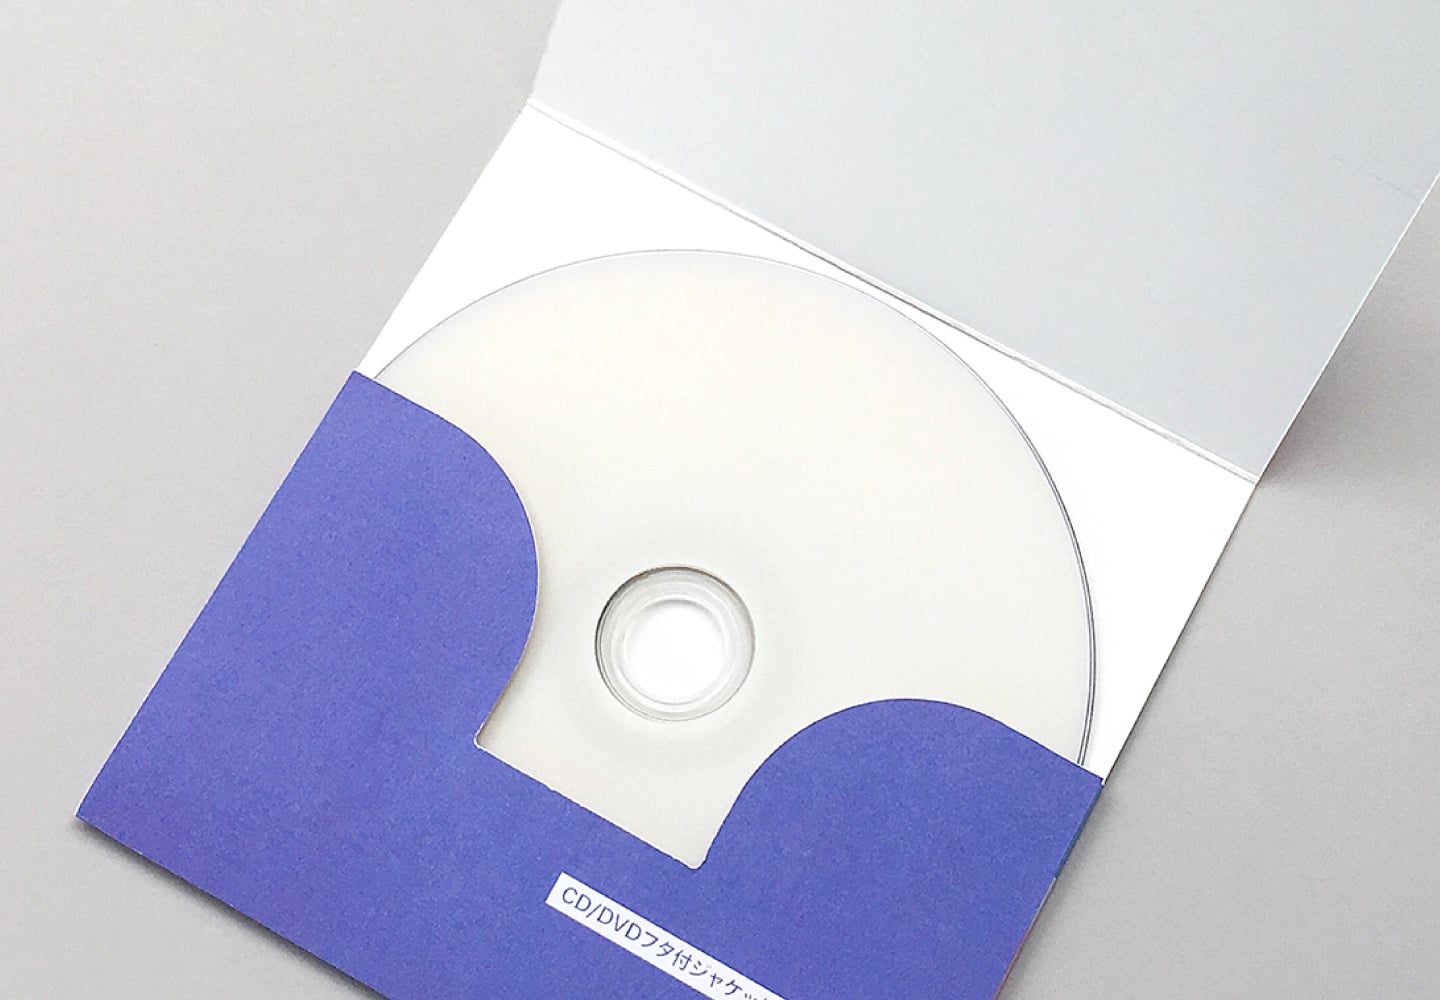 CD/DVDフタ付ジャケットにディスクを入れたイメージ